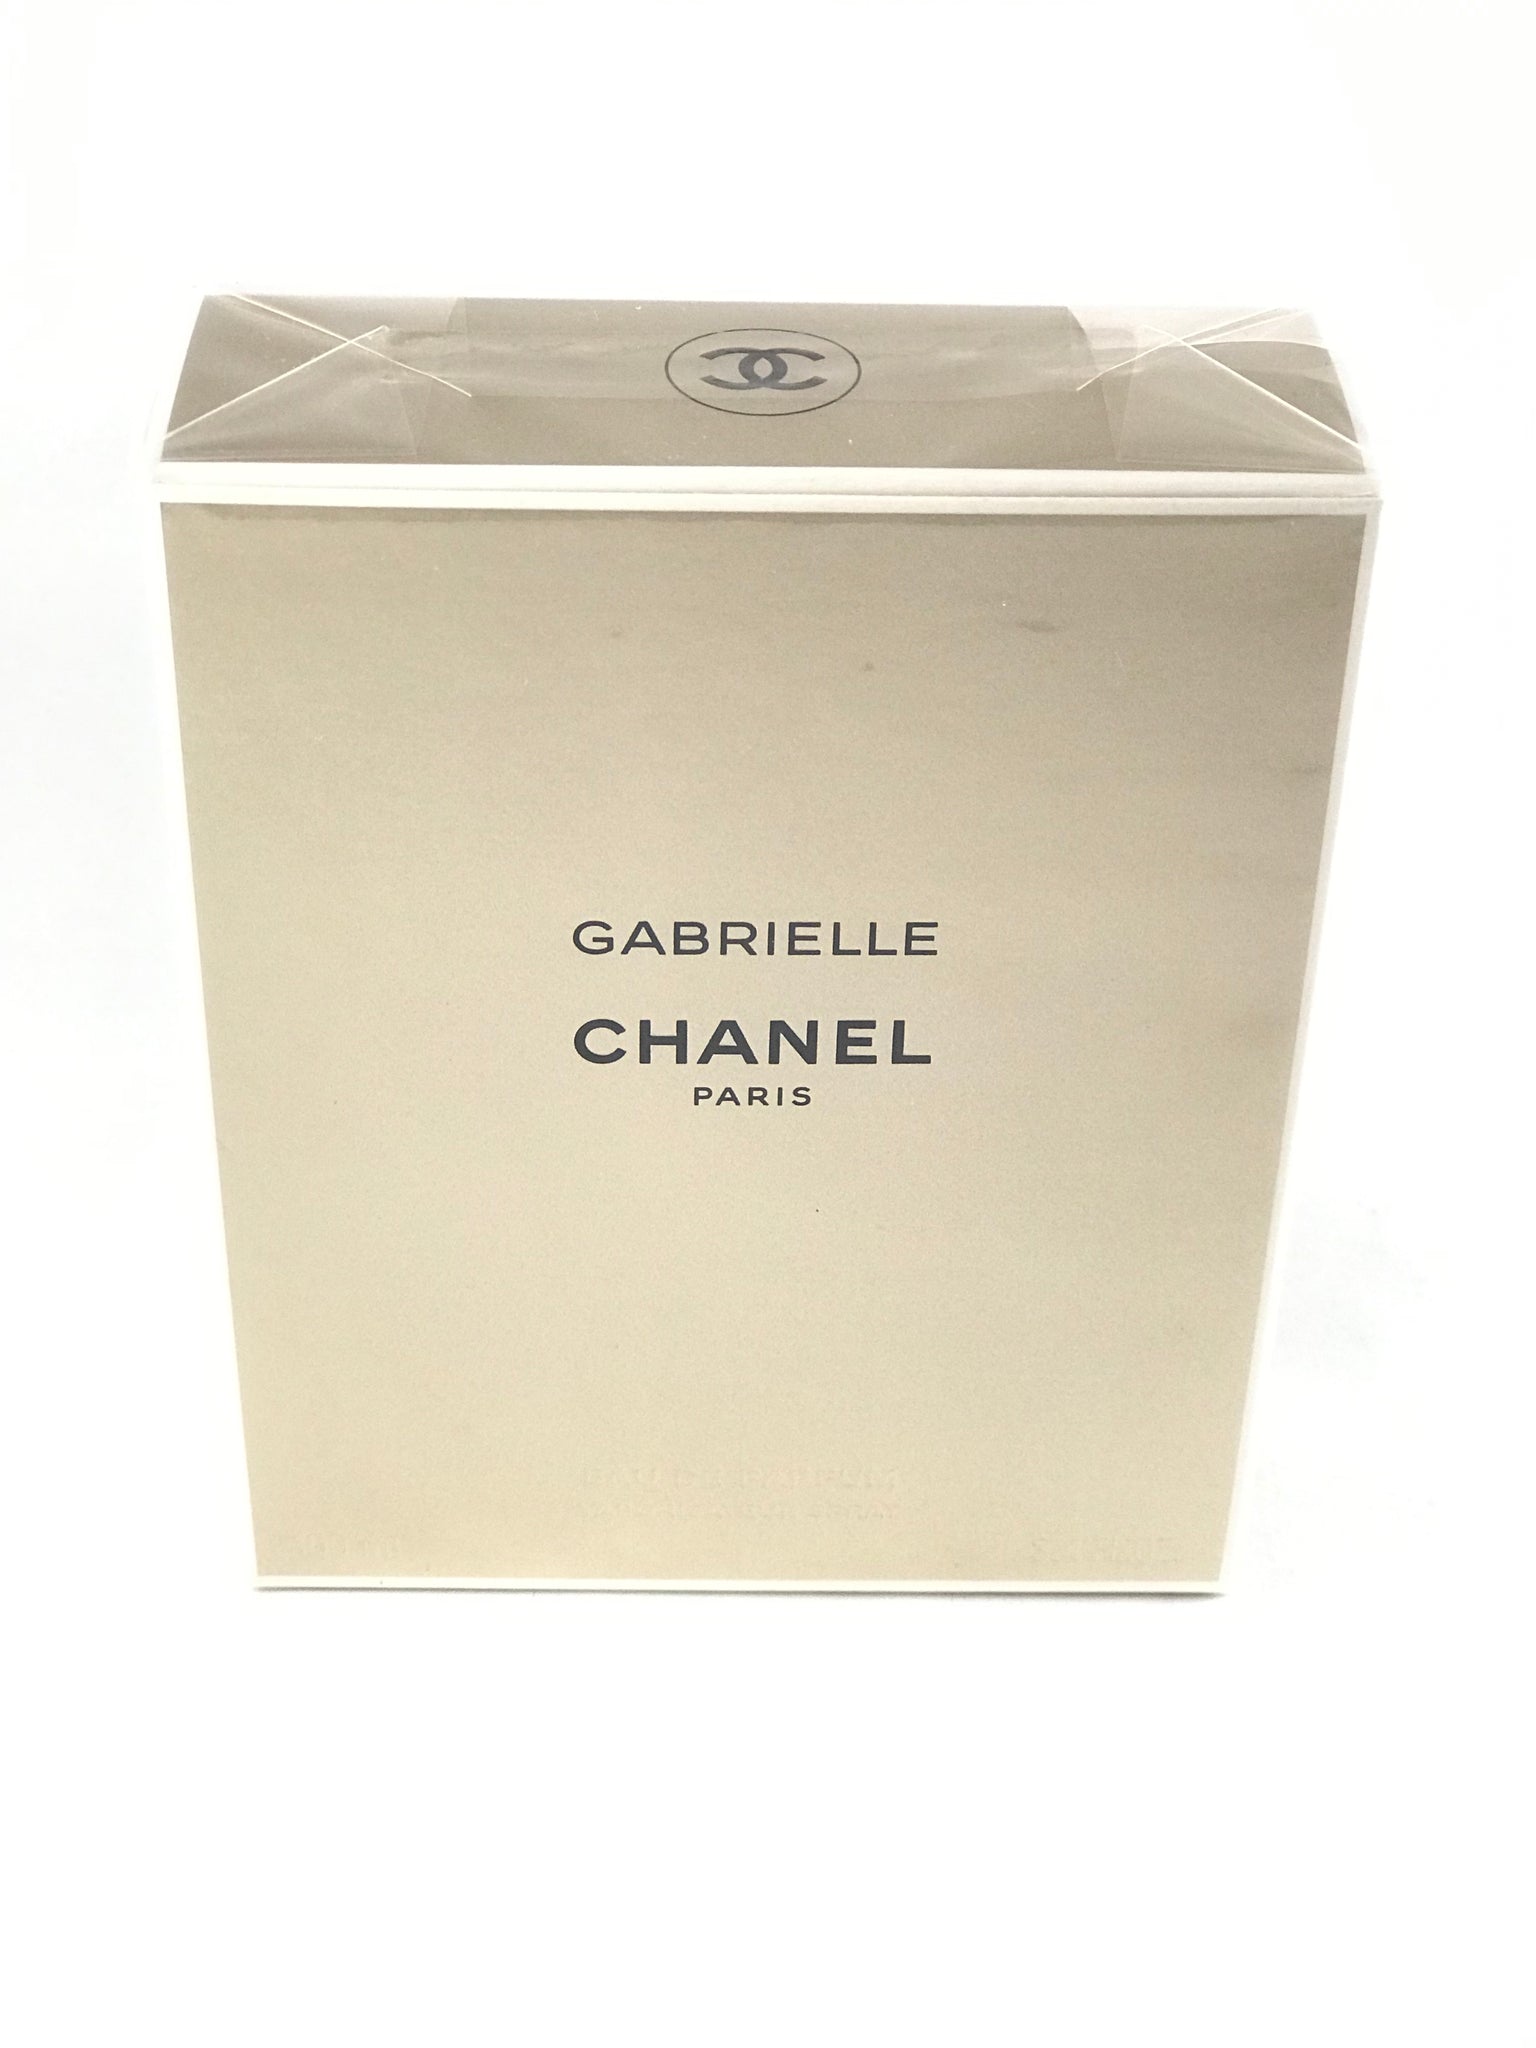 Chanel Gabrielle 3.4 fl oz-100 ml or 1.7 oz/50 ml EDP New In Box Authentic